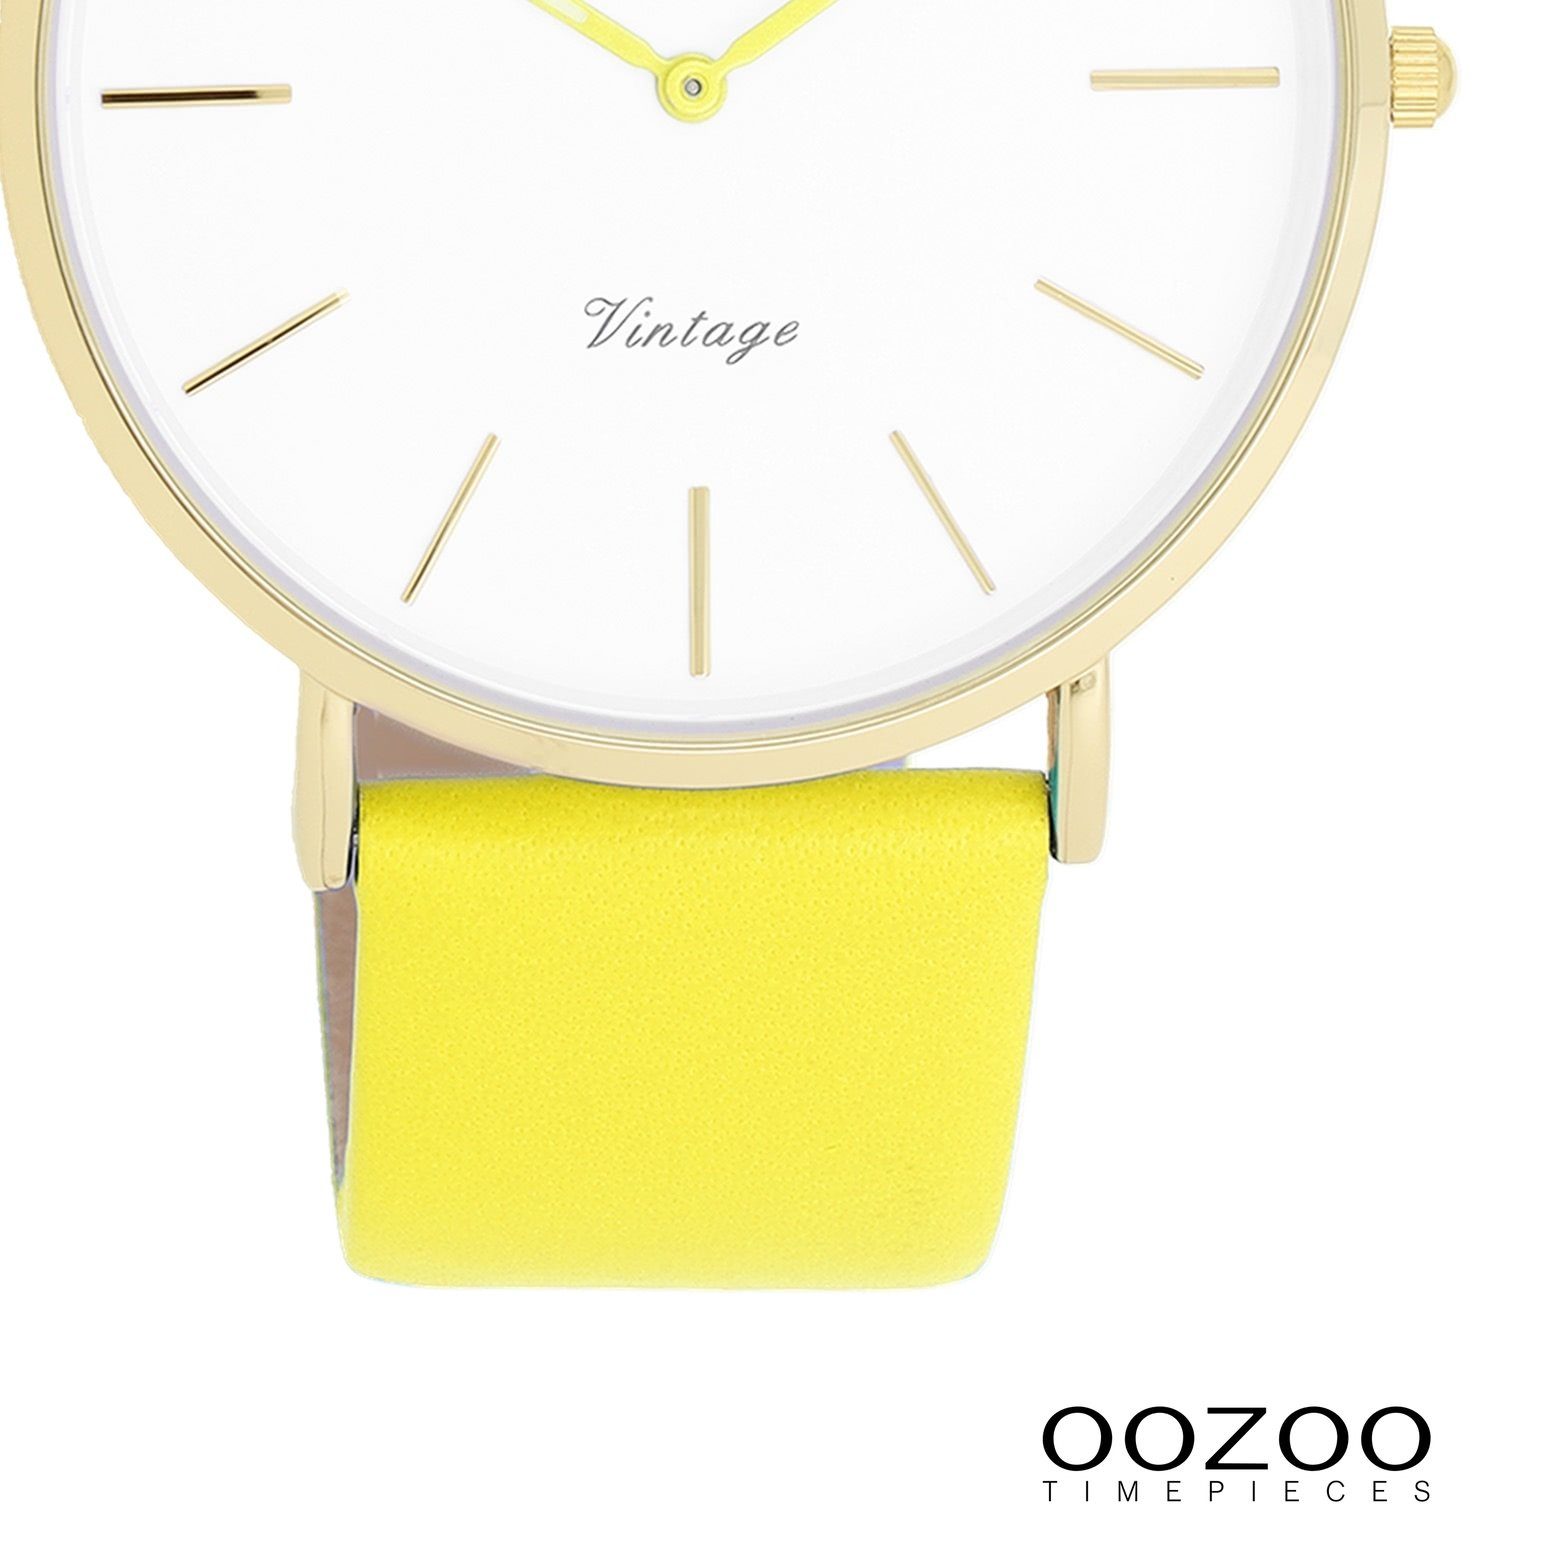 rund, Fashion OOZOO (ca. Lederarmband 40mm), Oozoo Damenuhr gelb, Armbanduhr Damen Vintage groß Quarzuhr Series,